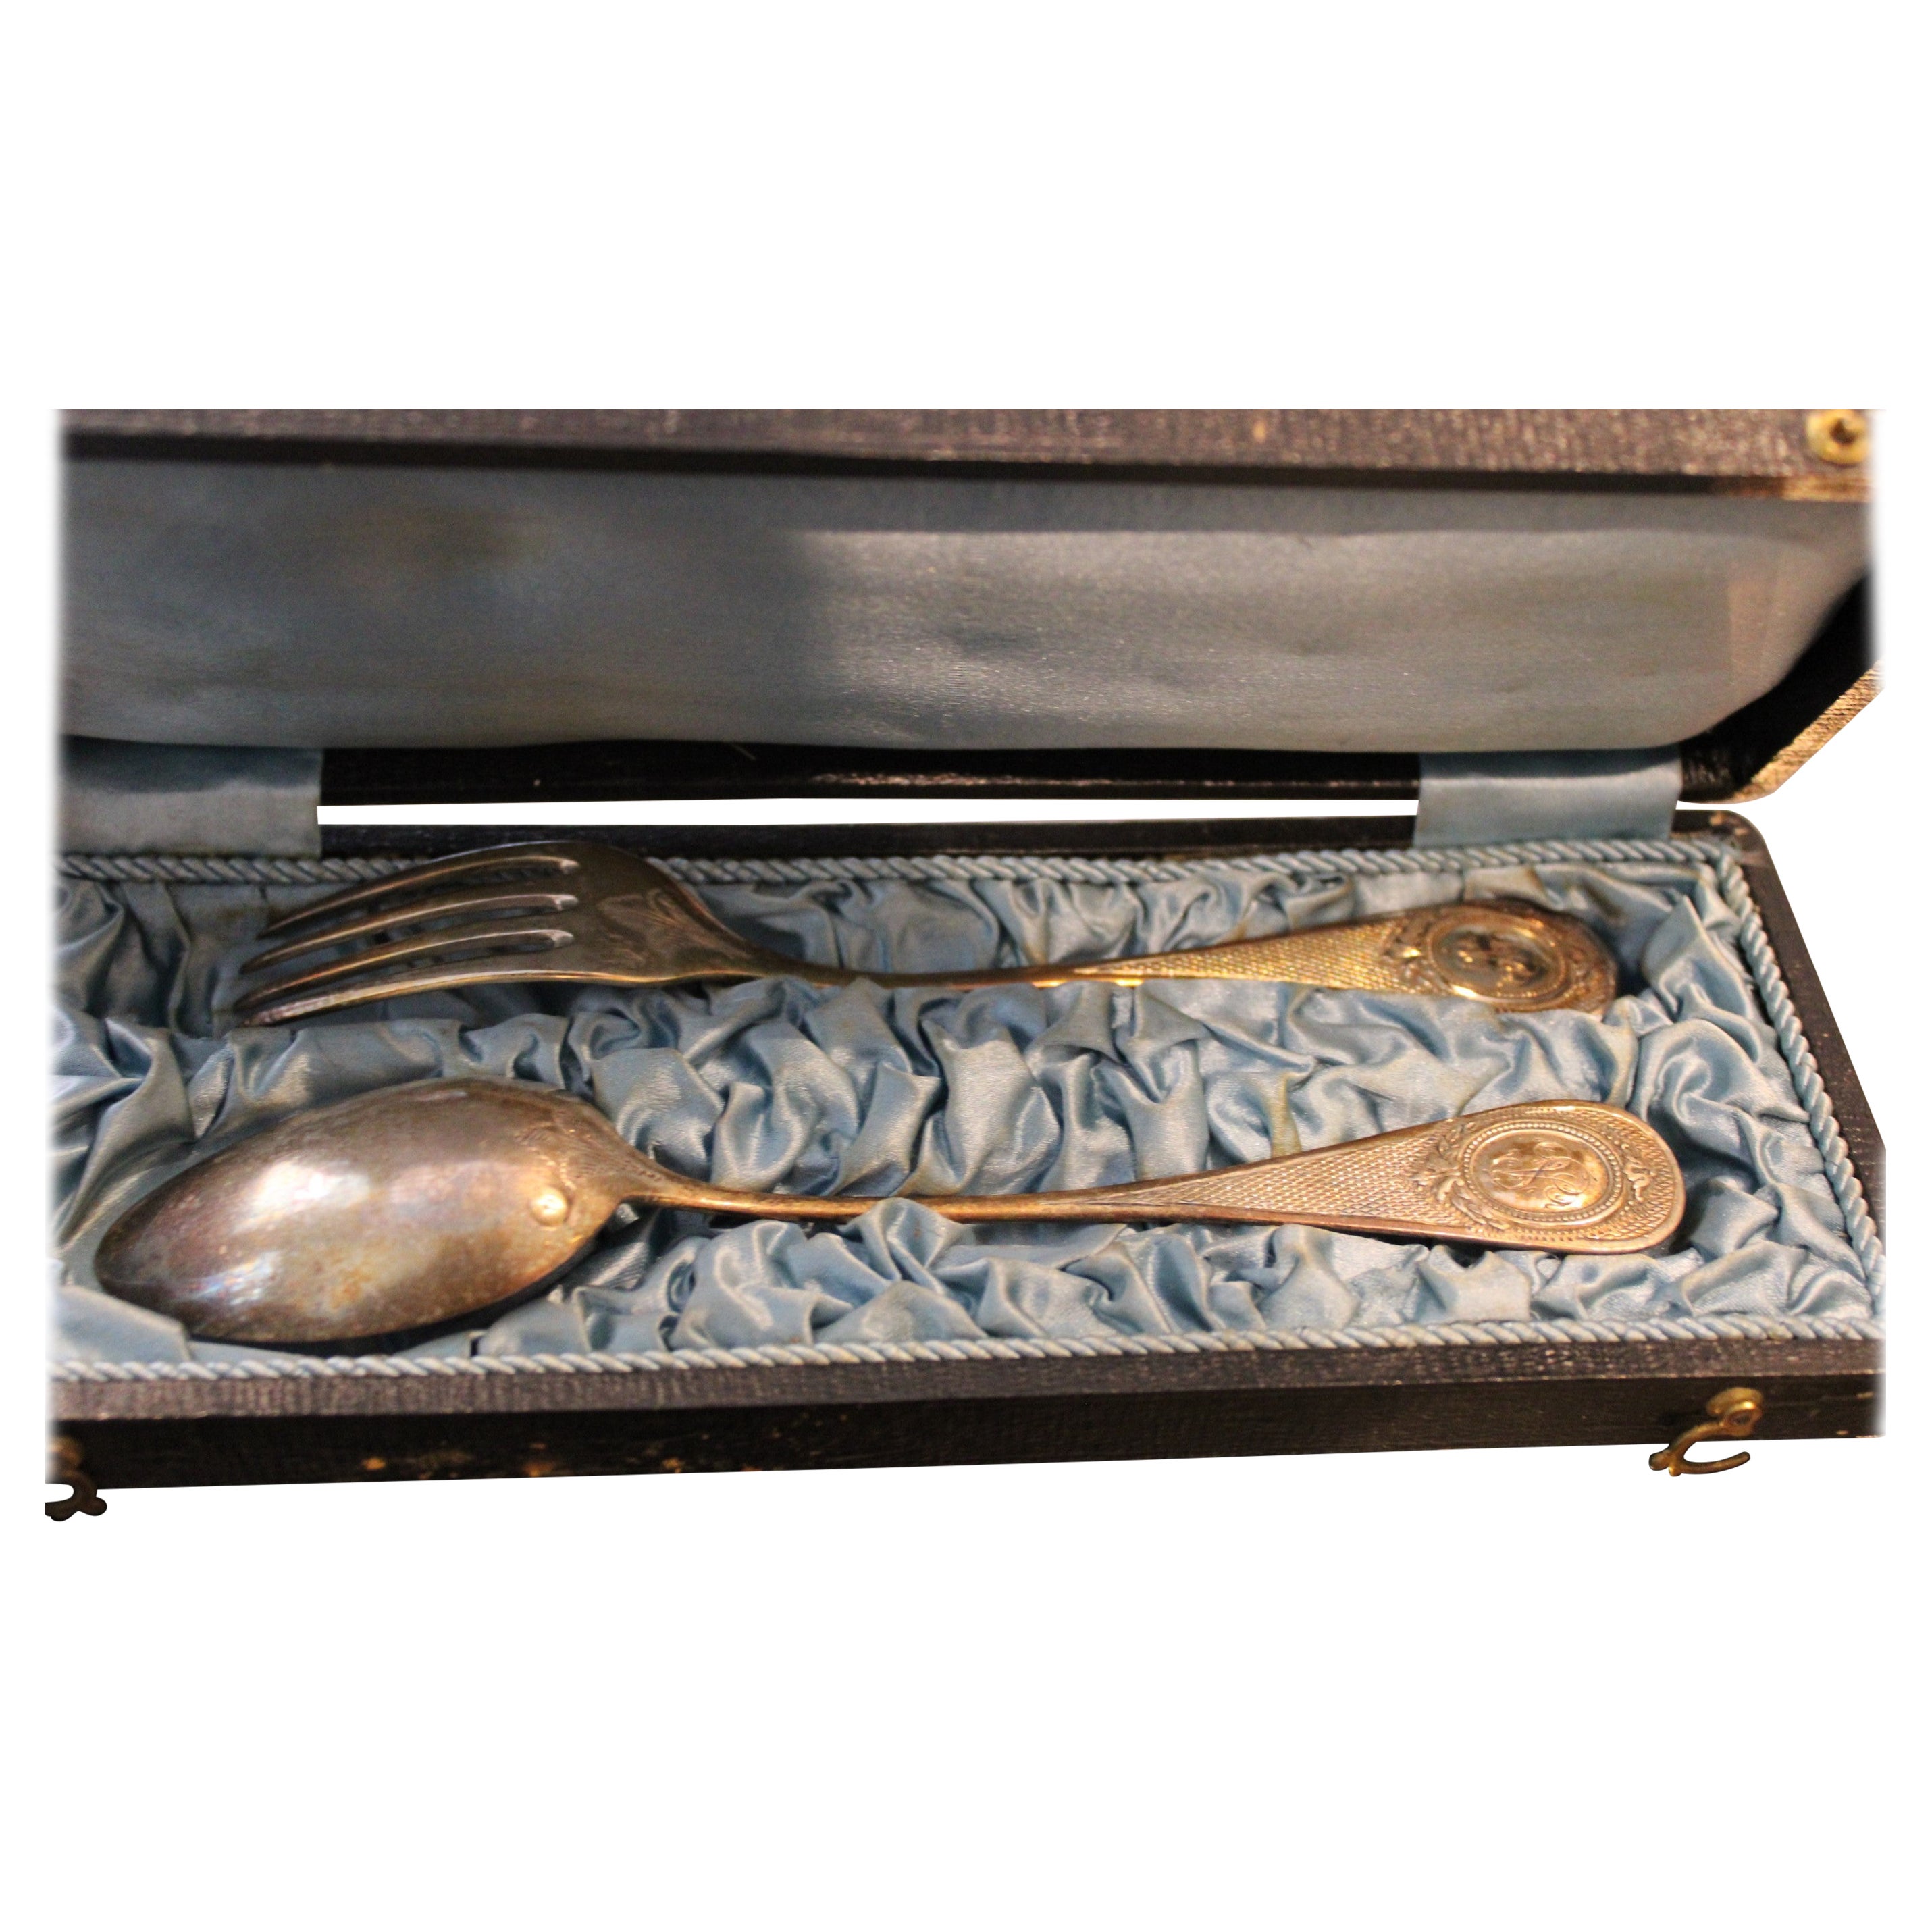 Solid Silver Dessert Cutlery in Their Box, 19th Century